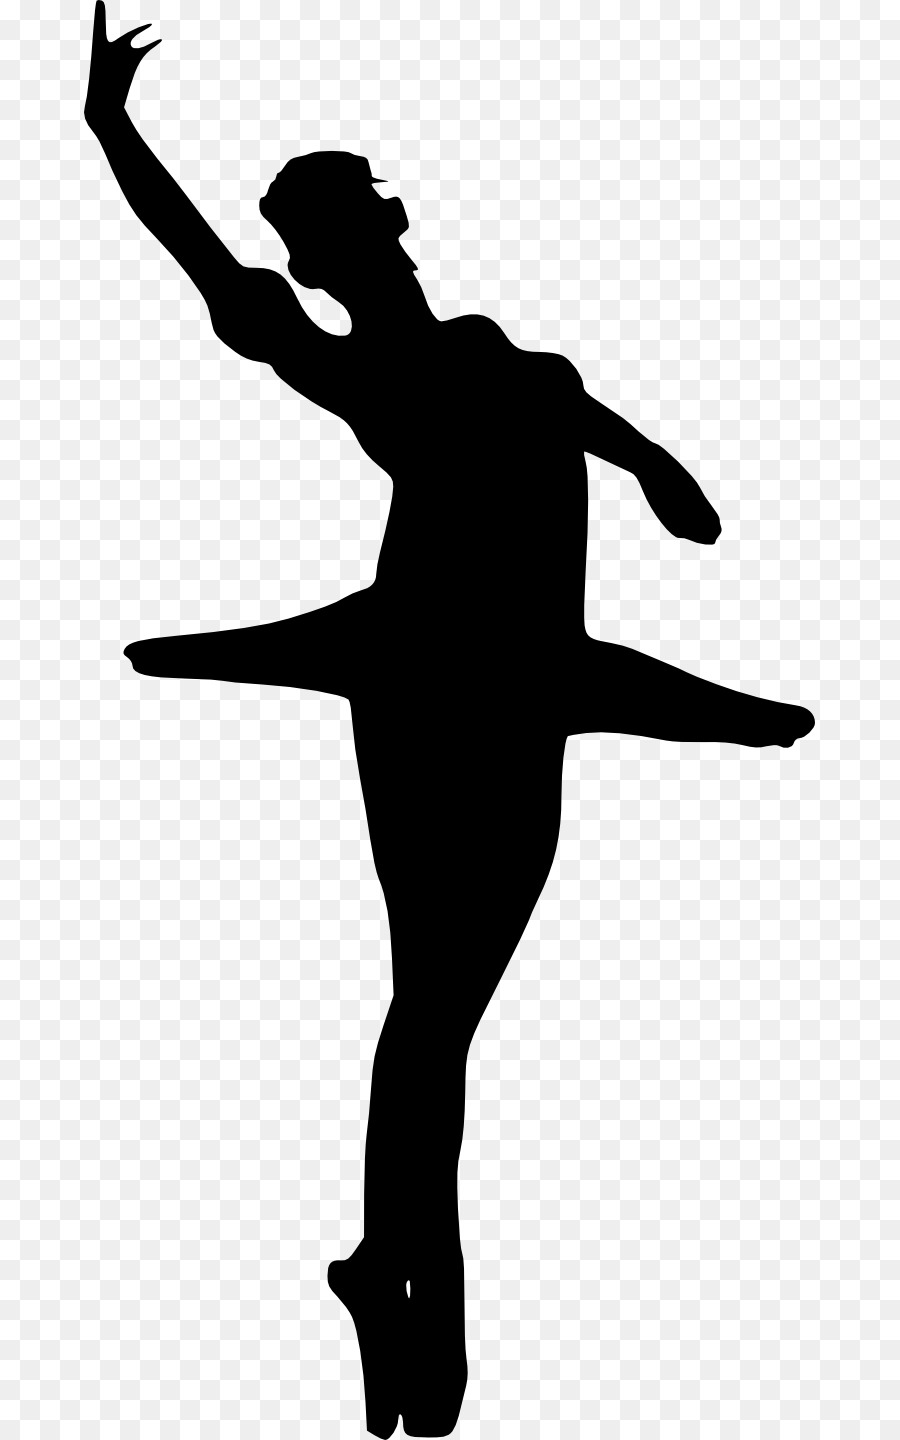 Silhouette Ballet Dancer Clip art - ballerina png download - 731*1440 - Free Transparent Silhouette png Download.